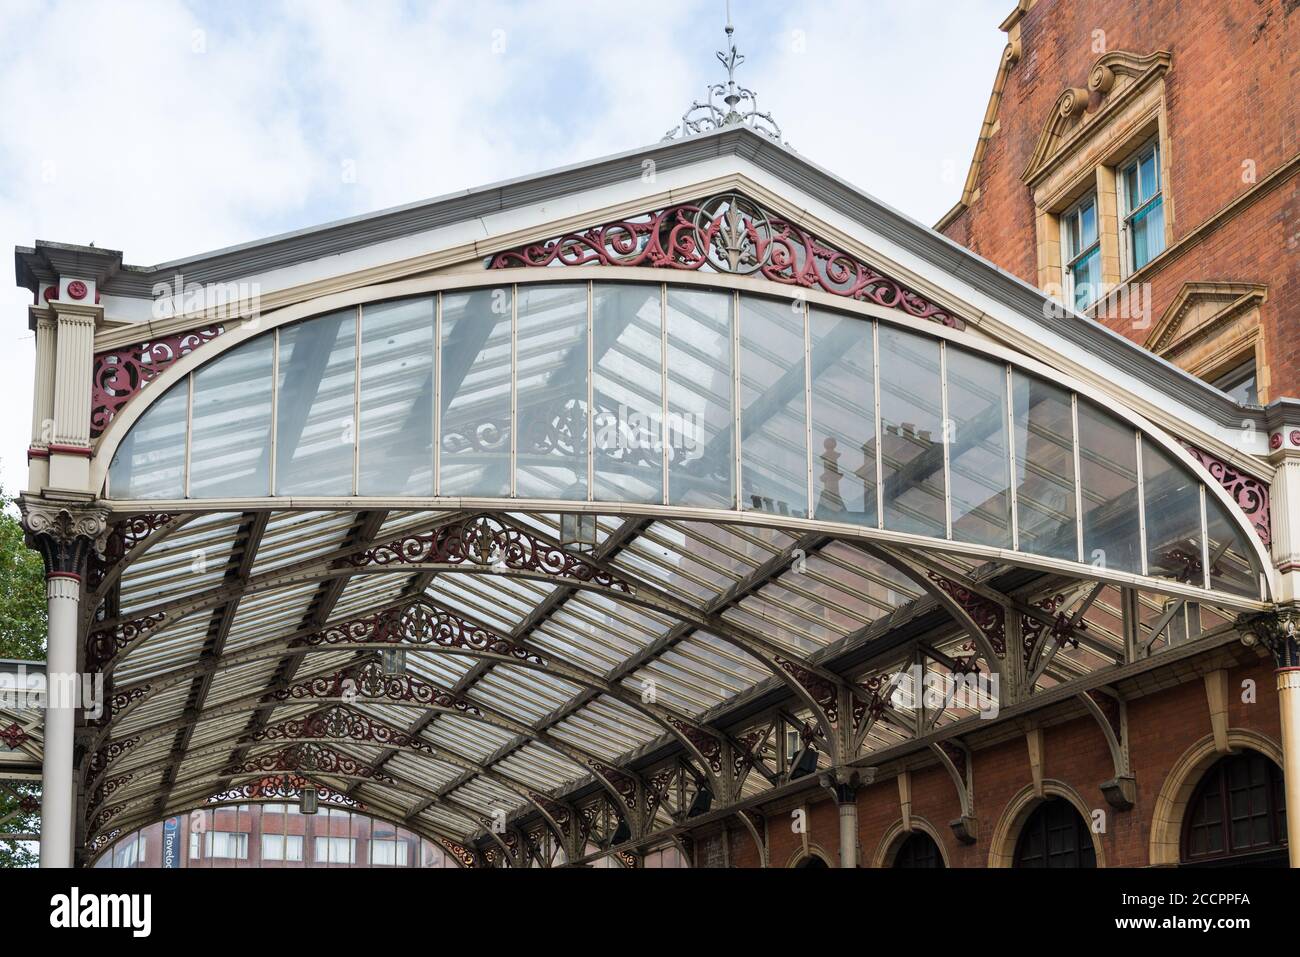 Wrought iron and glass canopy spanning the taxi rank on the forecourt of Marylebone railway station, Marylebone, London, England, UK. Stock Photo